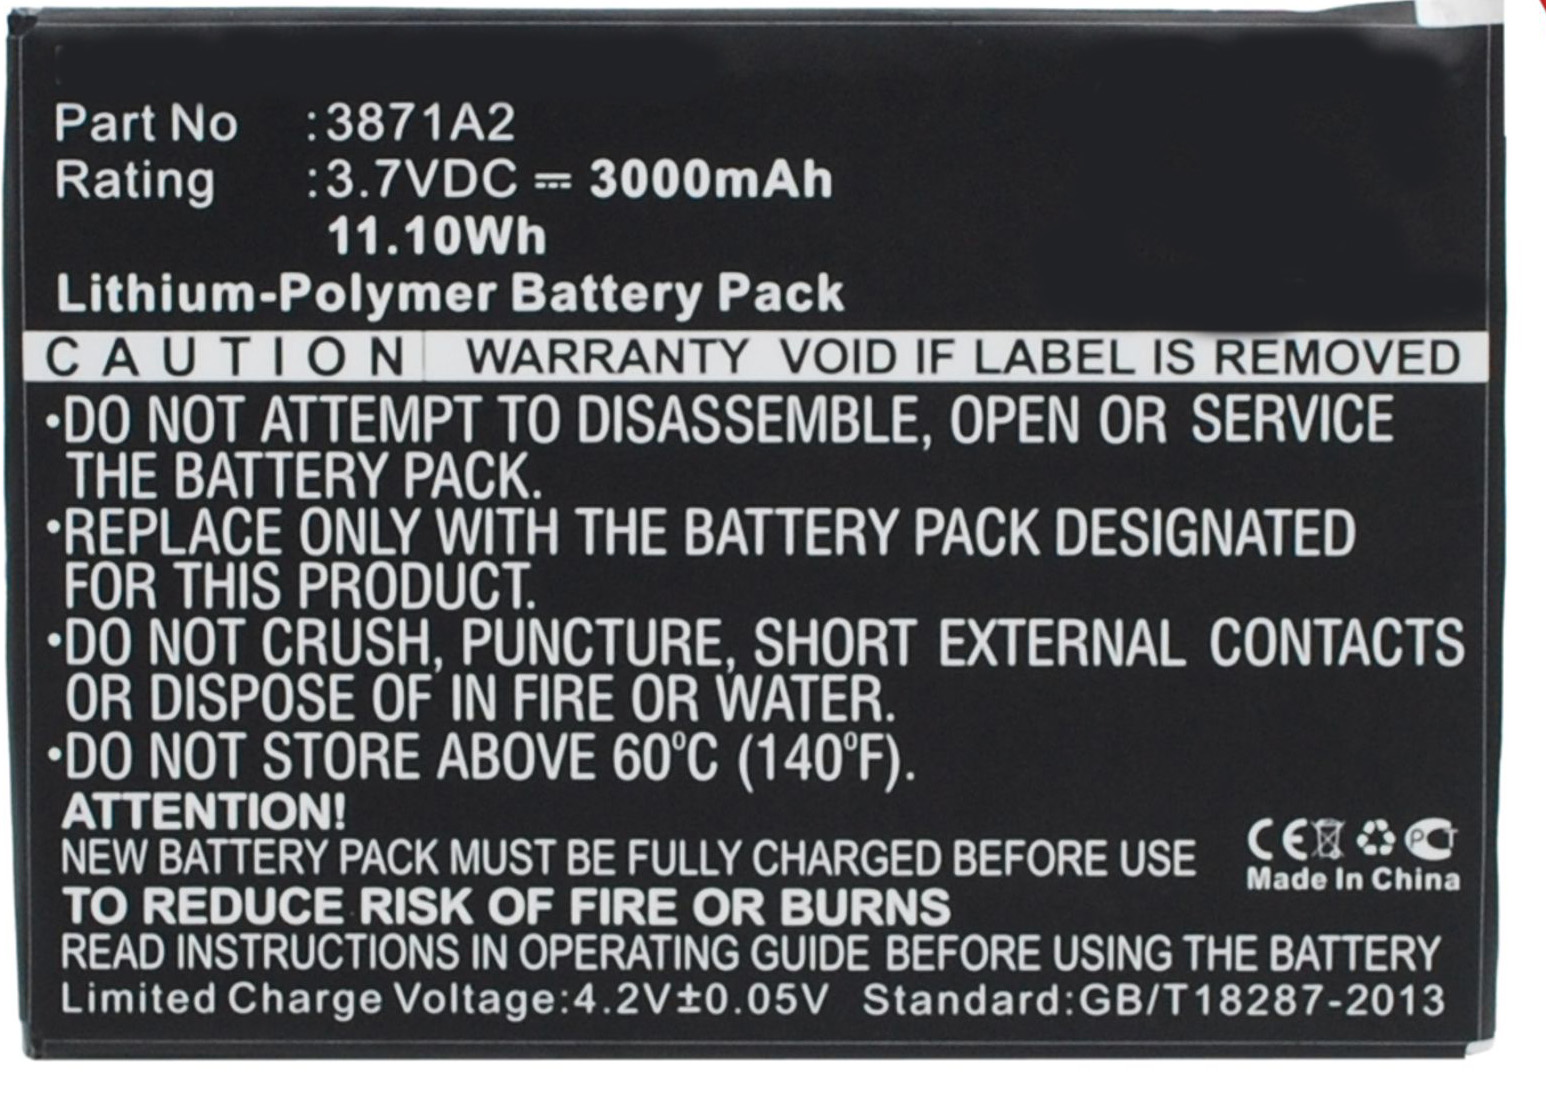 Batteries for PrestigioReplacement